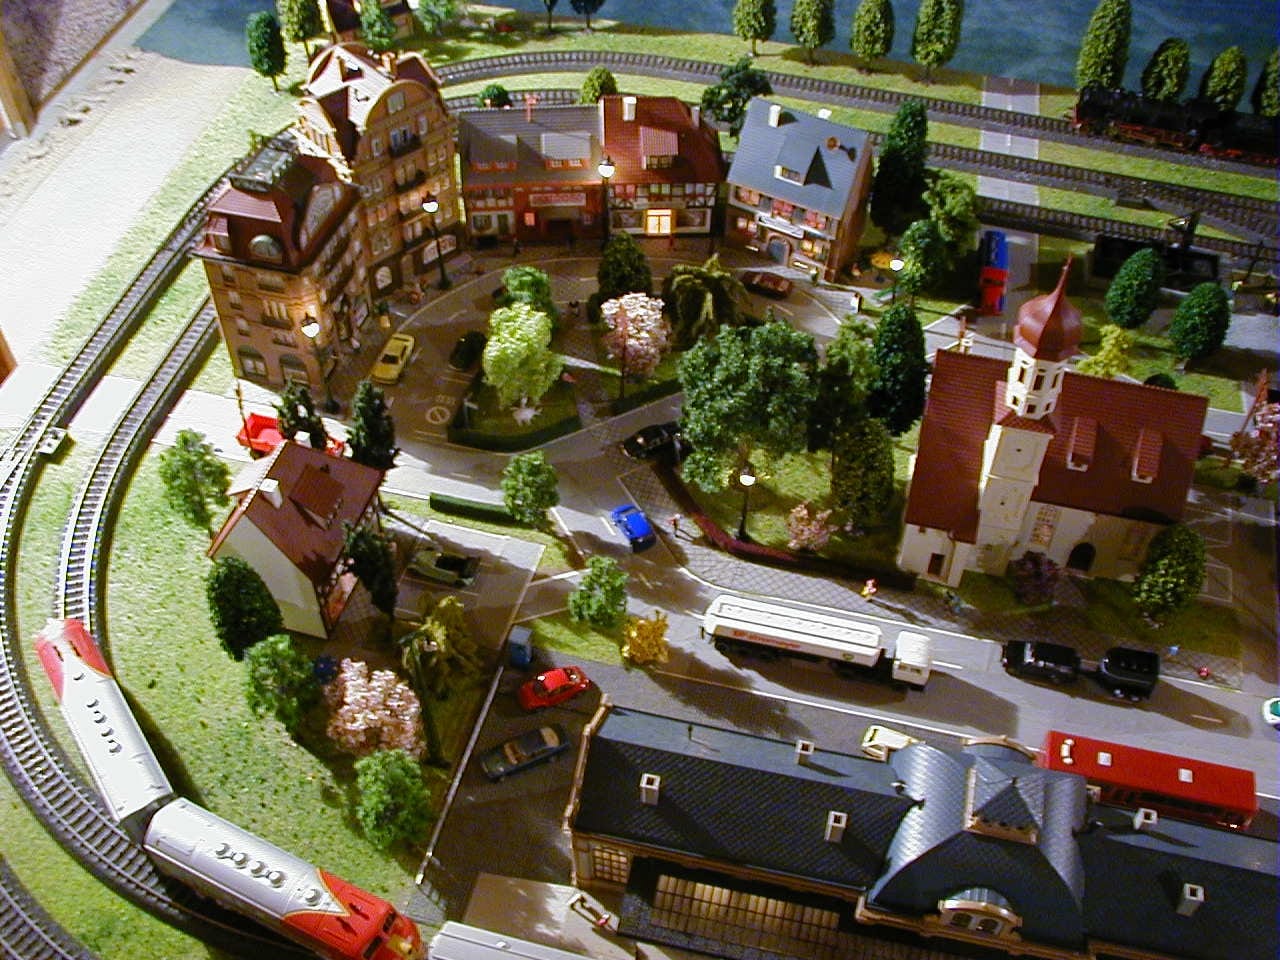 Model Train Layouts 4x8 4x8 marklin ho scale model train layout